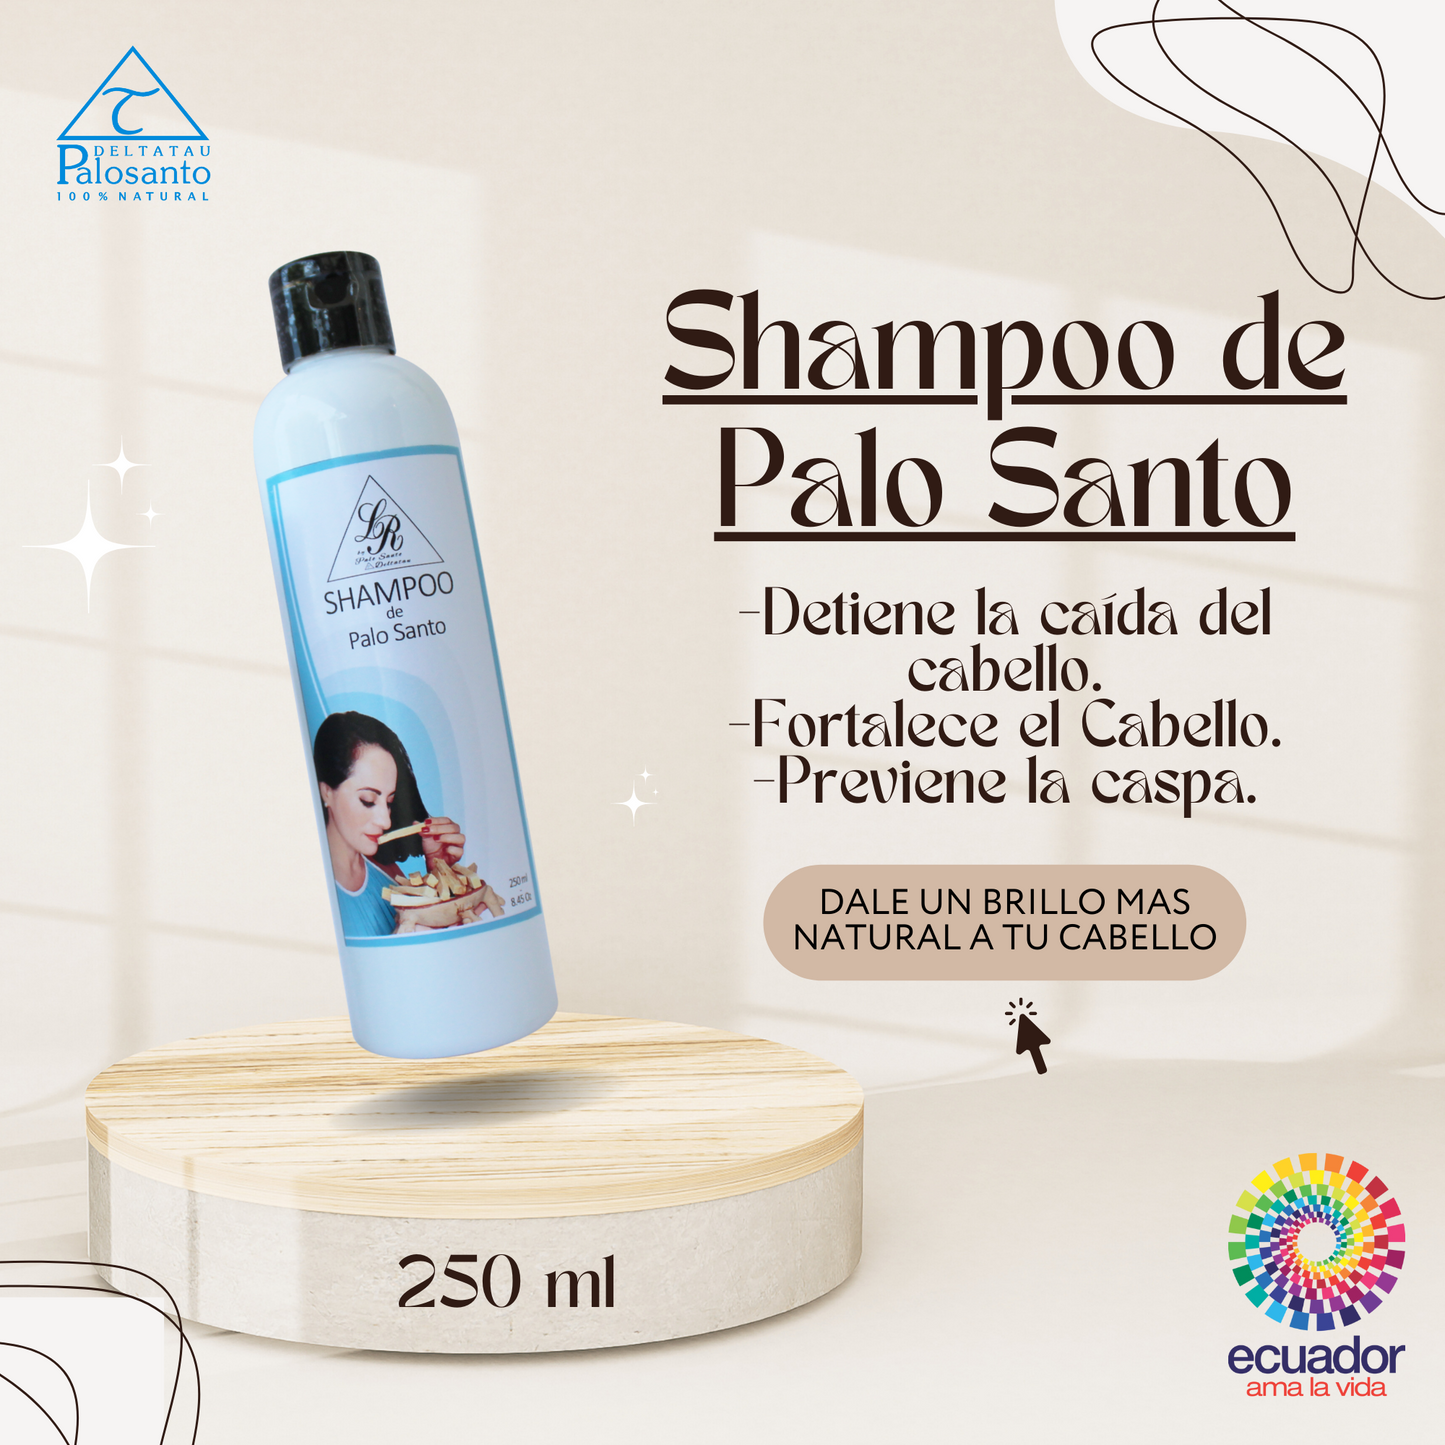 Shampoo al Palo Santo